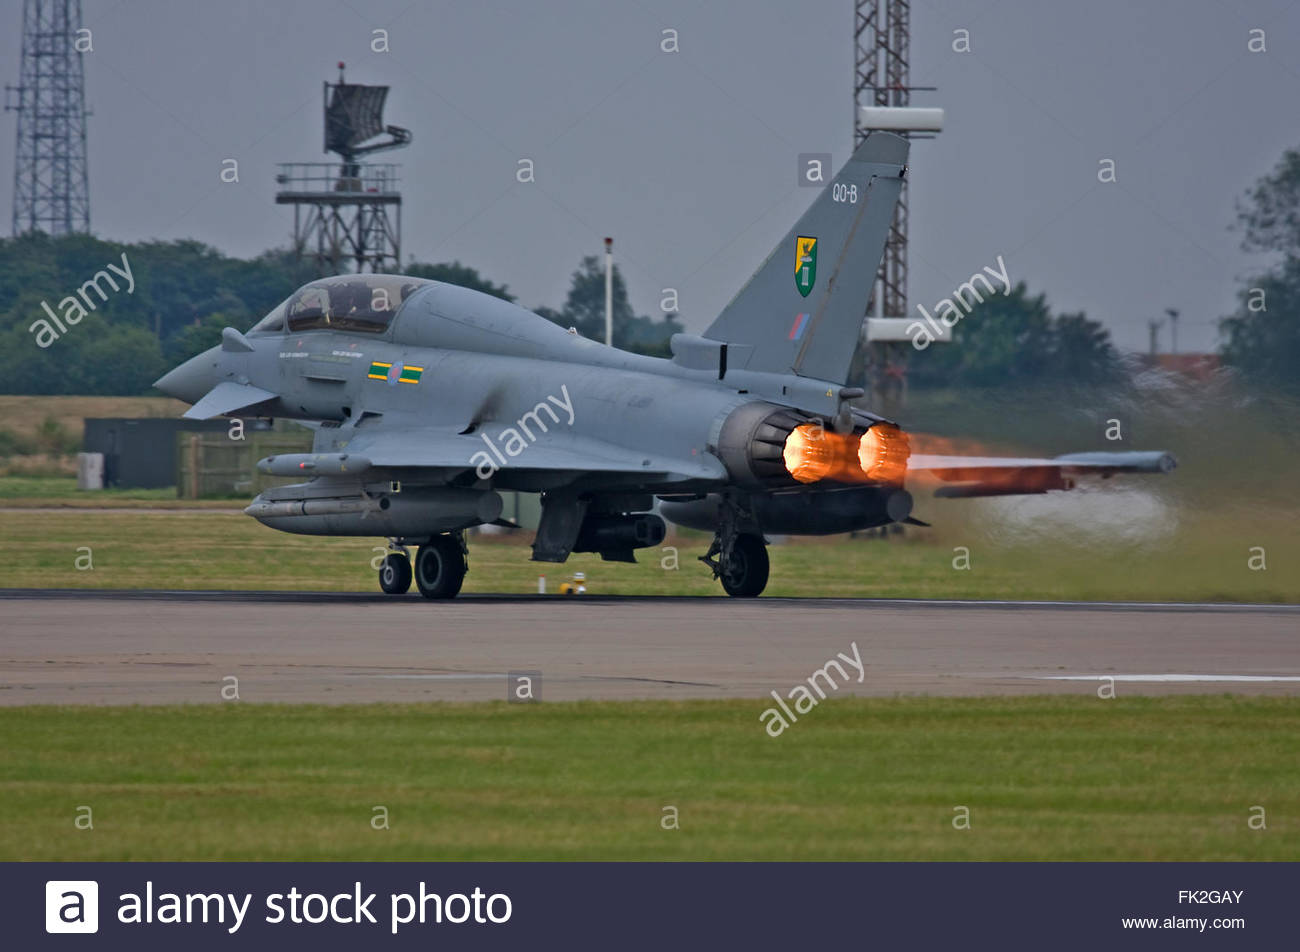 eurofighter-typhoon-of-no3f-squadron-raf-with-full-burner-blasting-FK2GAY.jpg